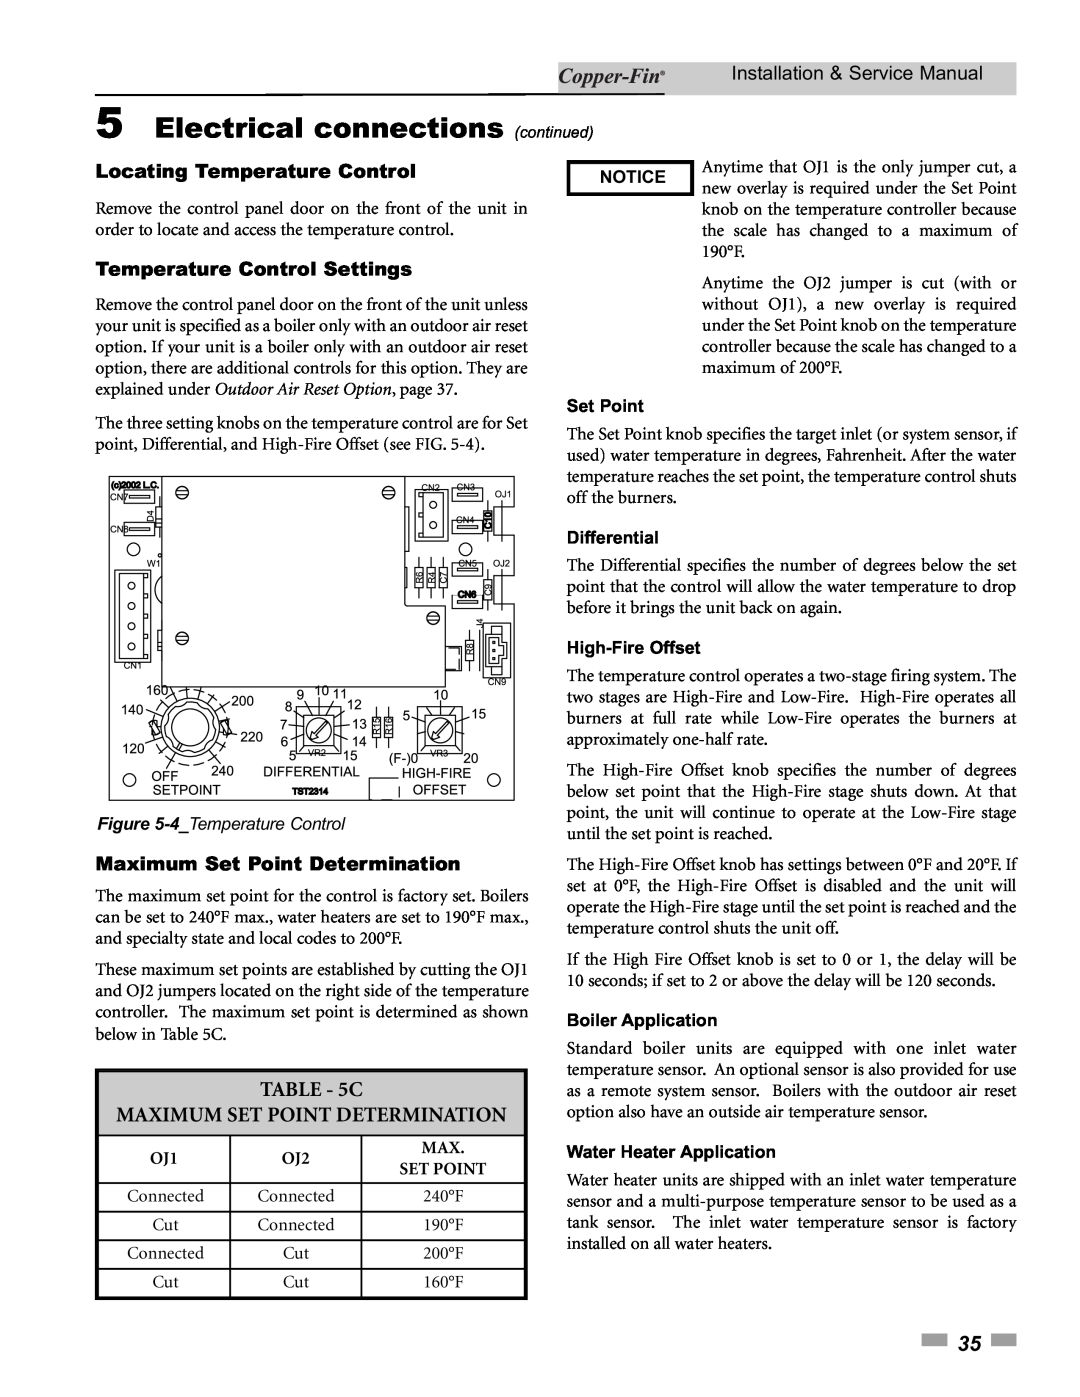 Lochinvar 90 5Electrical connections continued, C Maximum Set Point Determination, Locating Temperature Control, Notice 